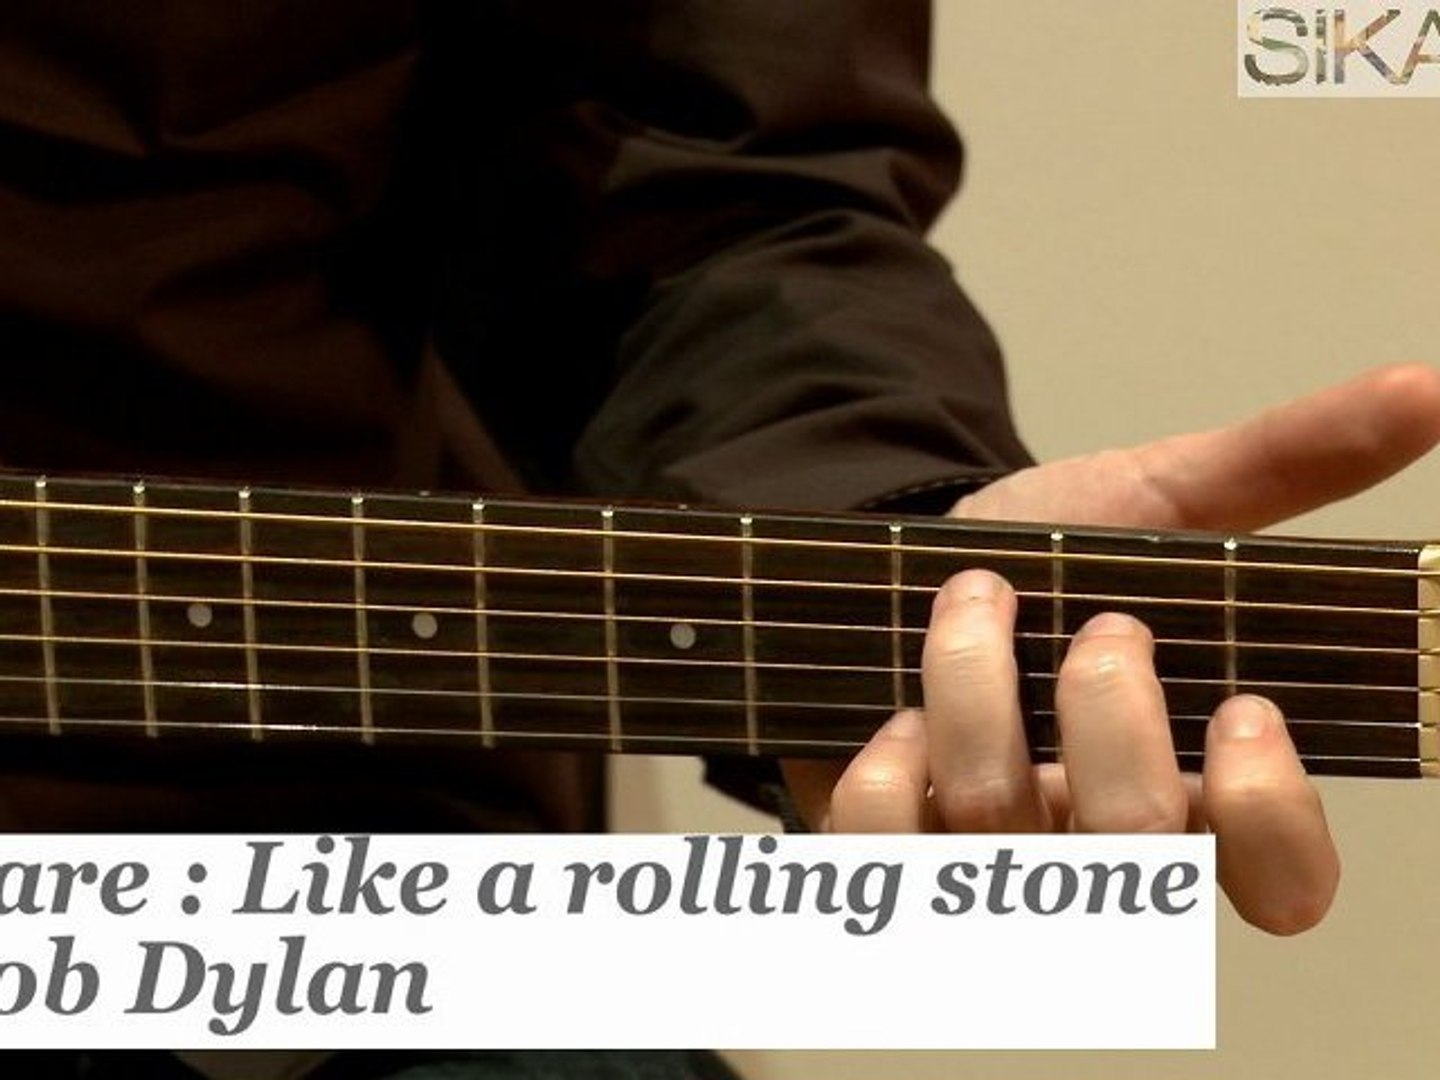 Comment jouer Like a rolling stone de Bob Dylan ? - HD - Vidéo Dailymotion